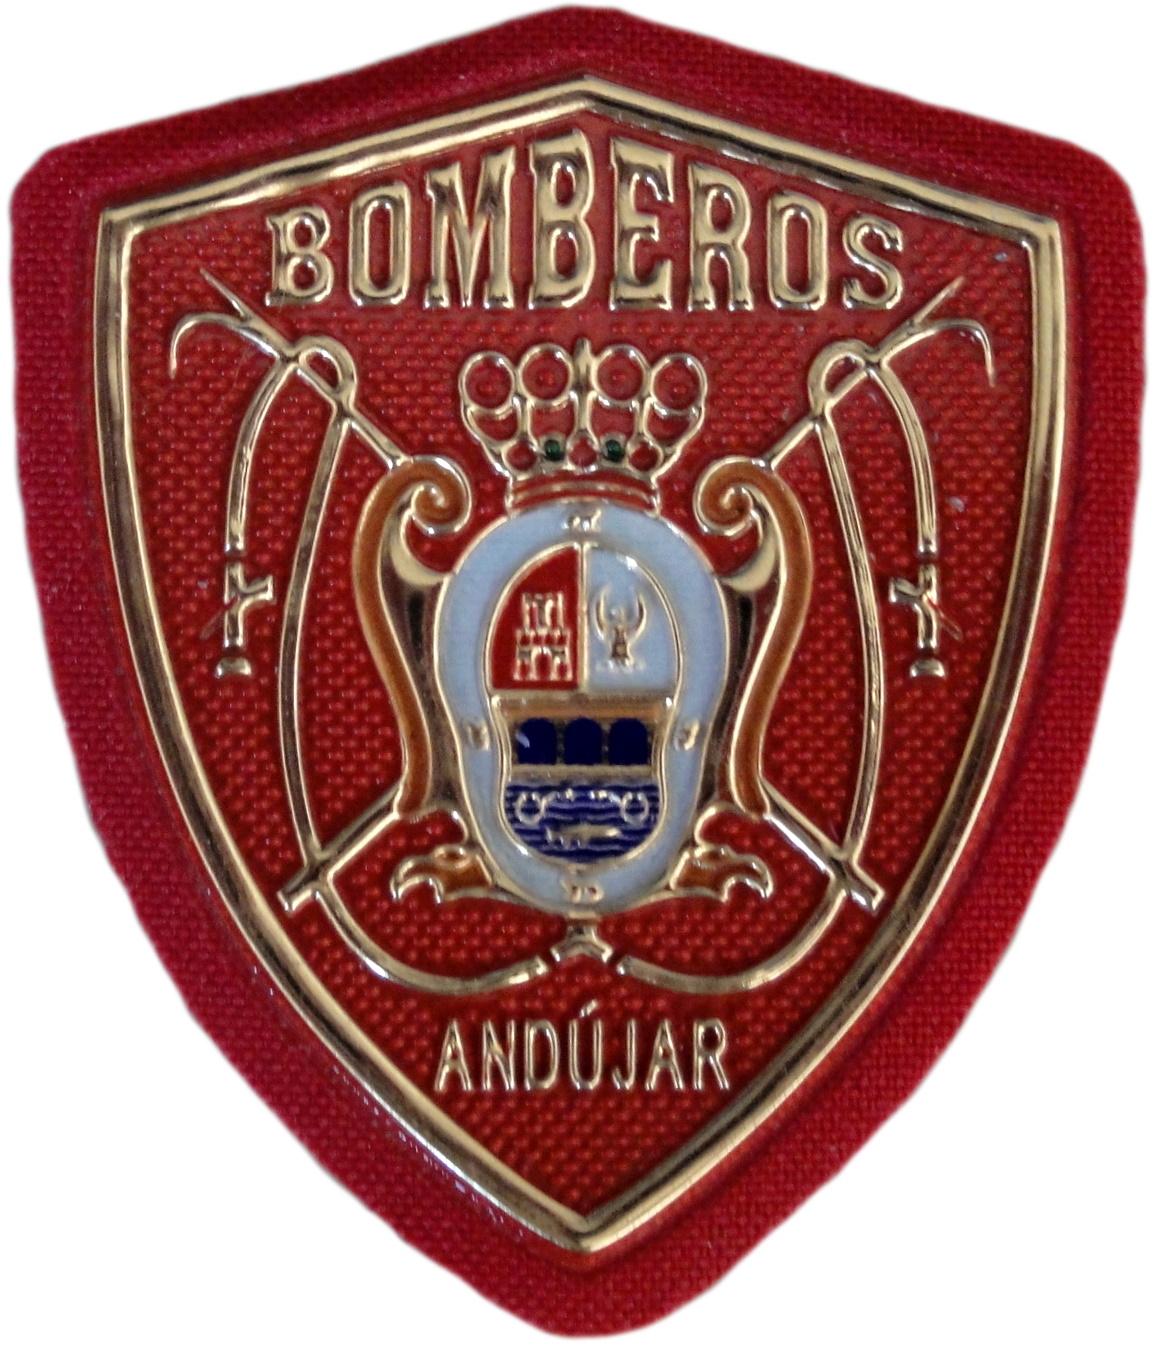 Bomberos de Andújar parche insignia emblema distintivo Fire Dept